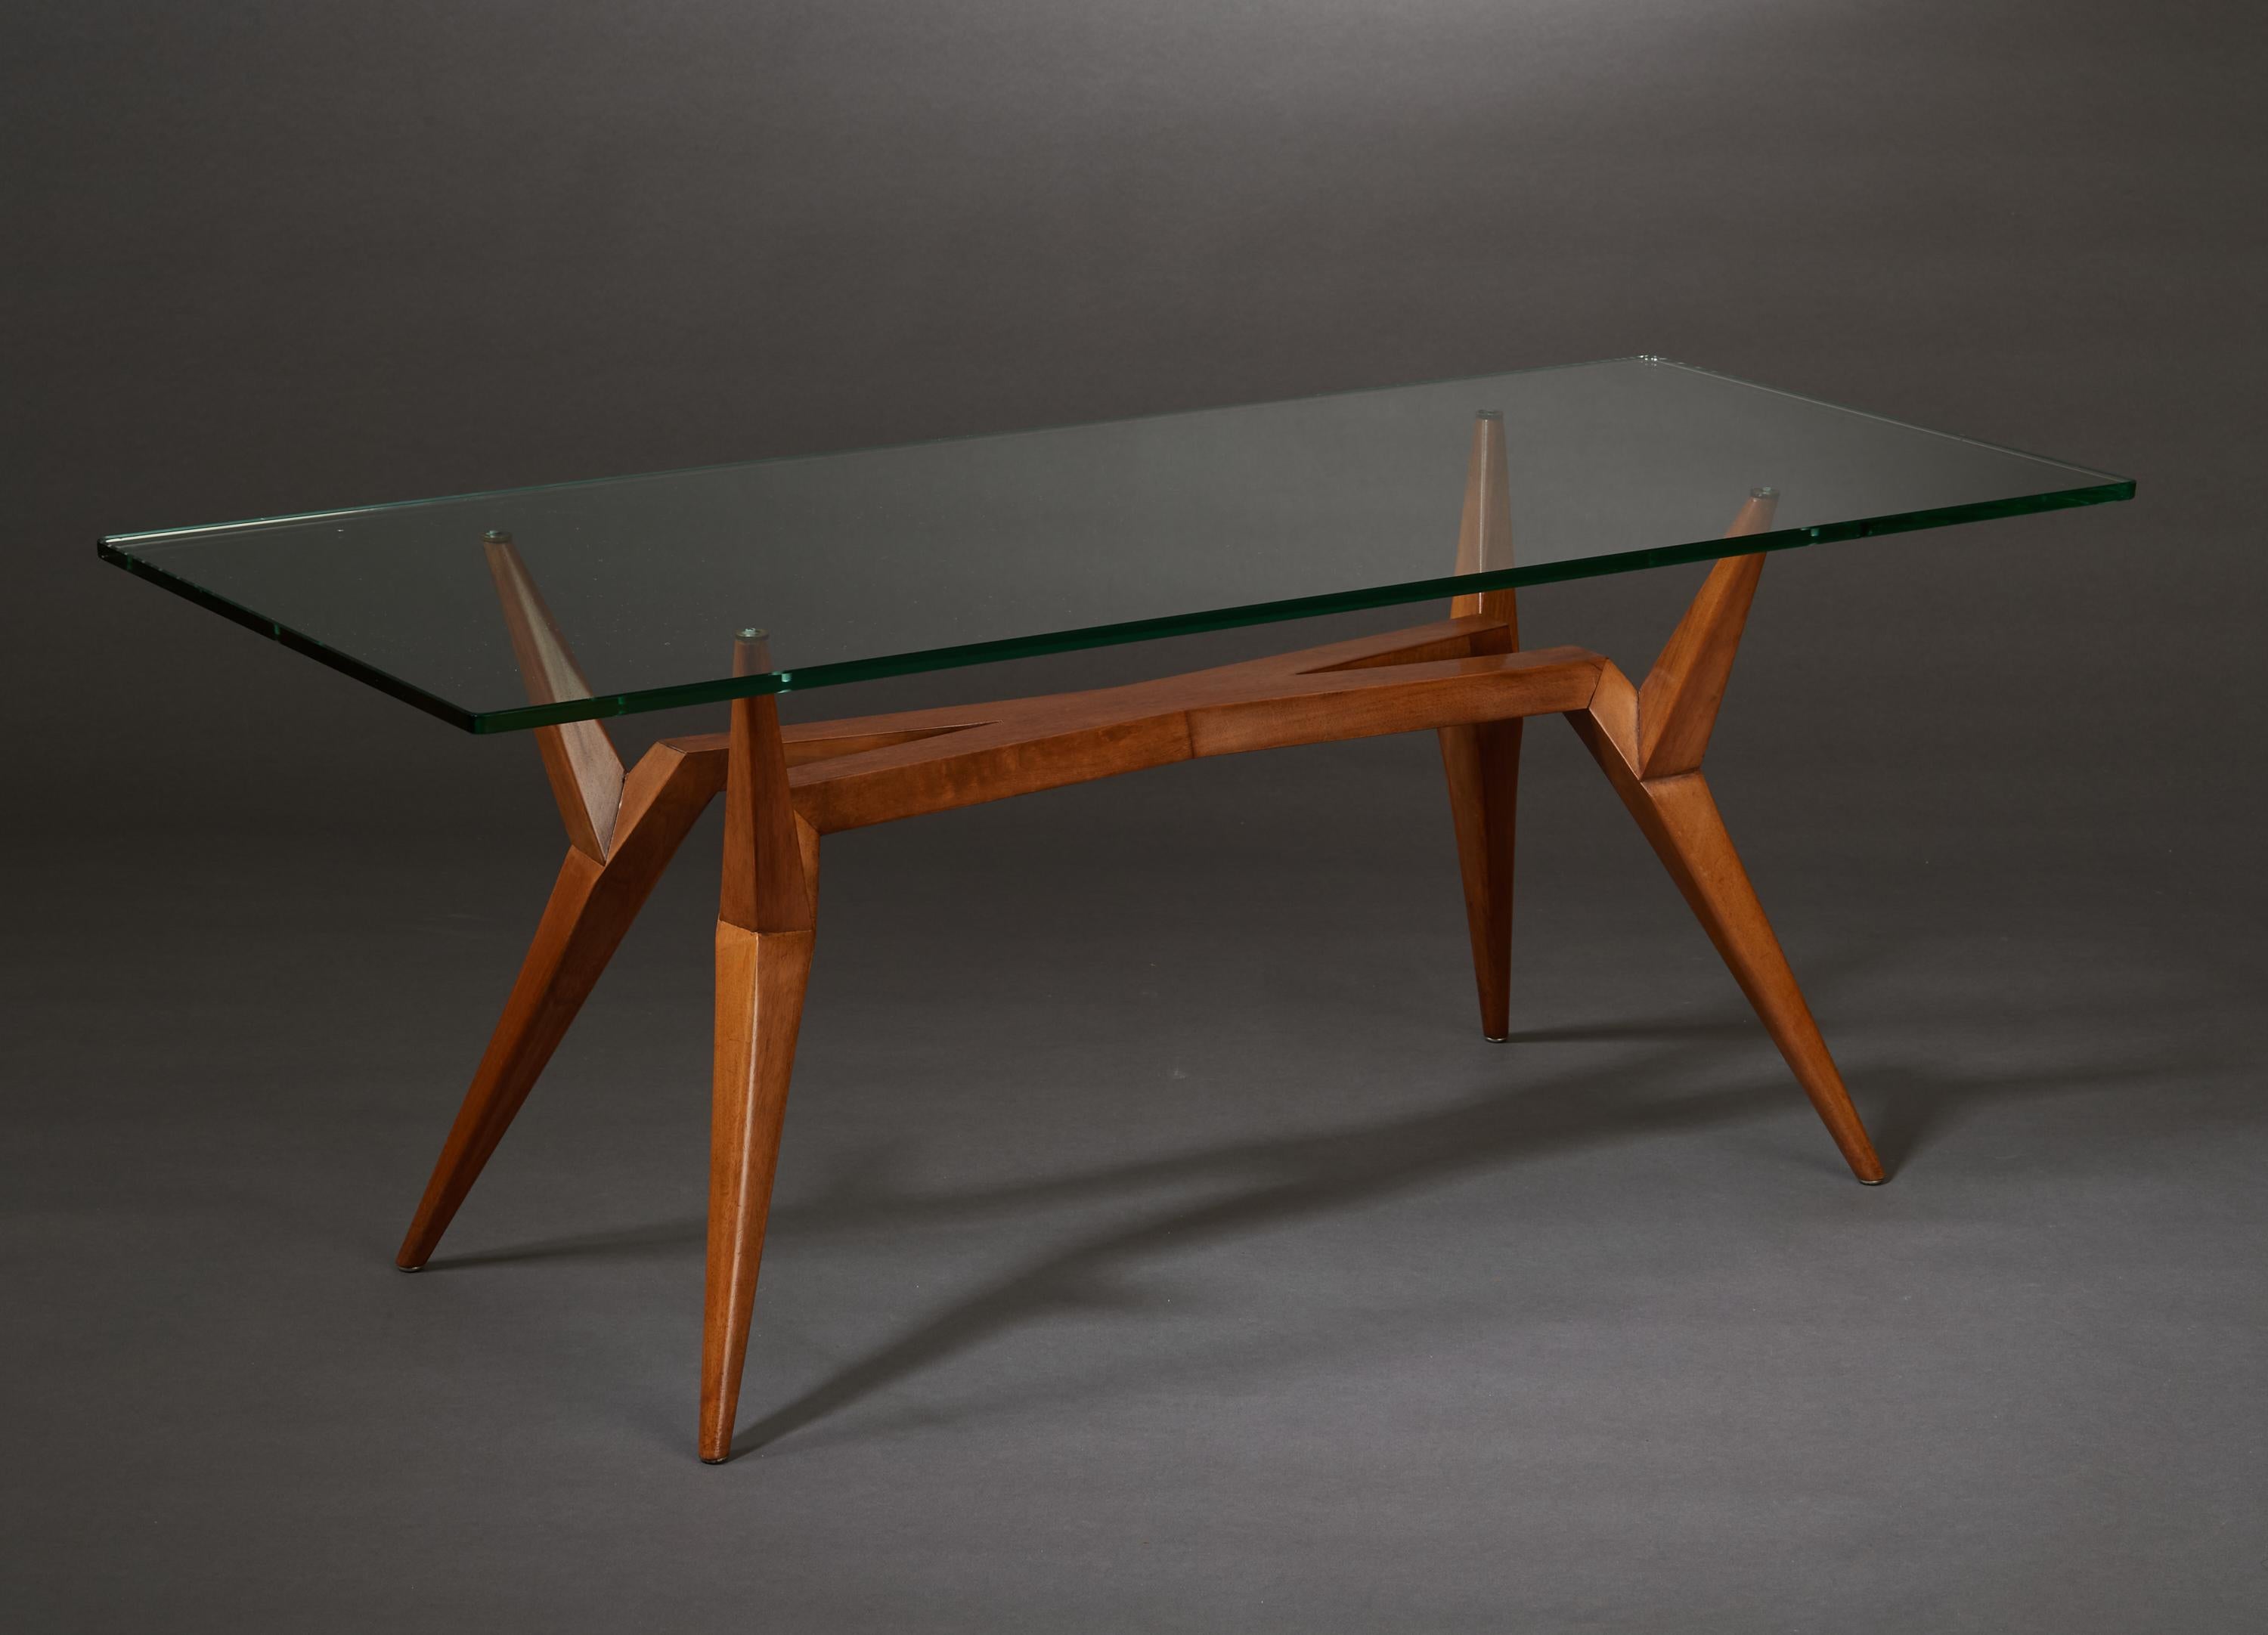 Pierluigi Giordani Rare Constructivist Coffee Table in Wood & Glass, Italy 1950s For Sale 5